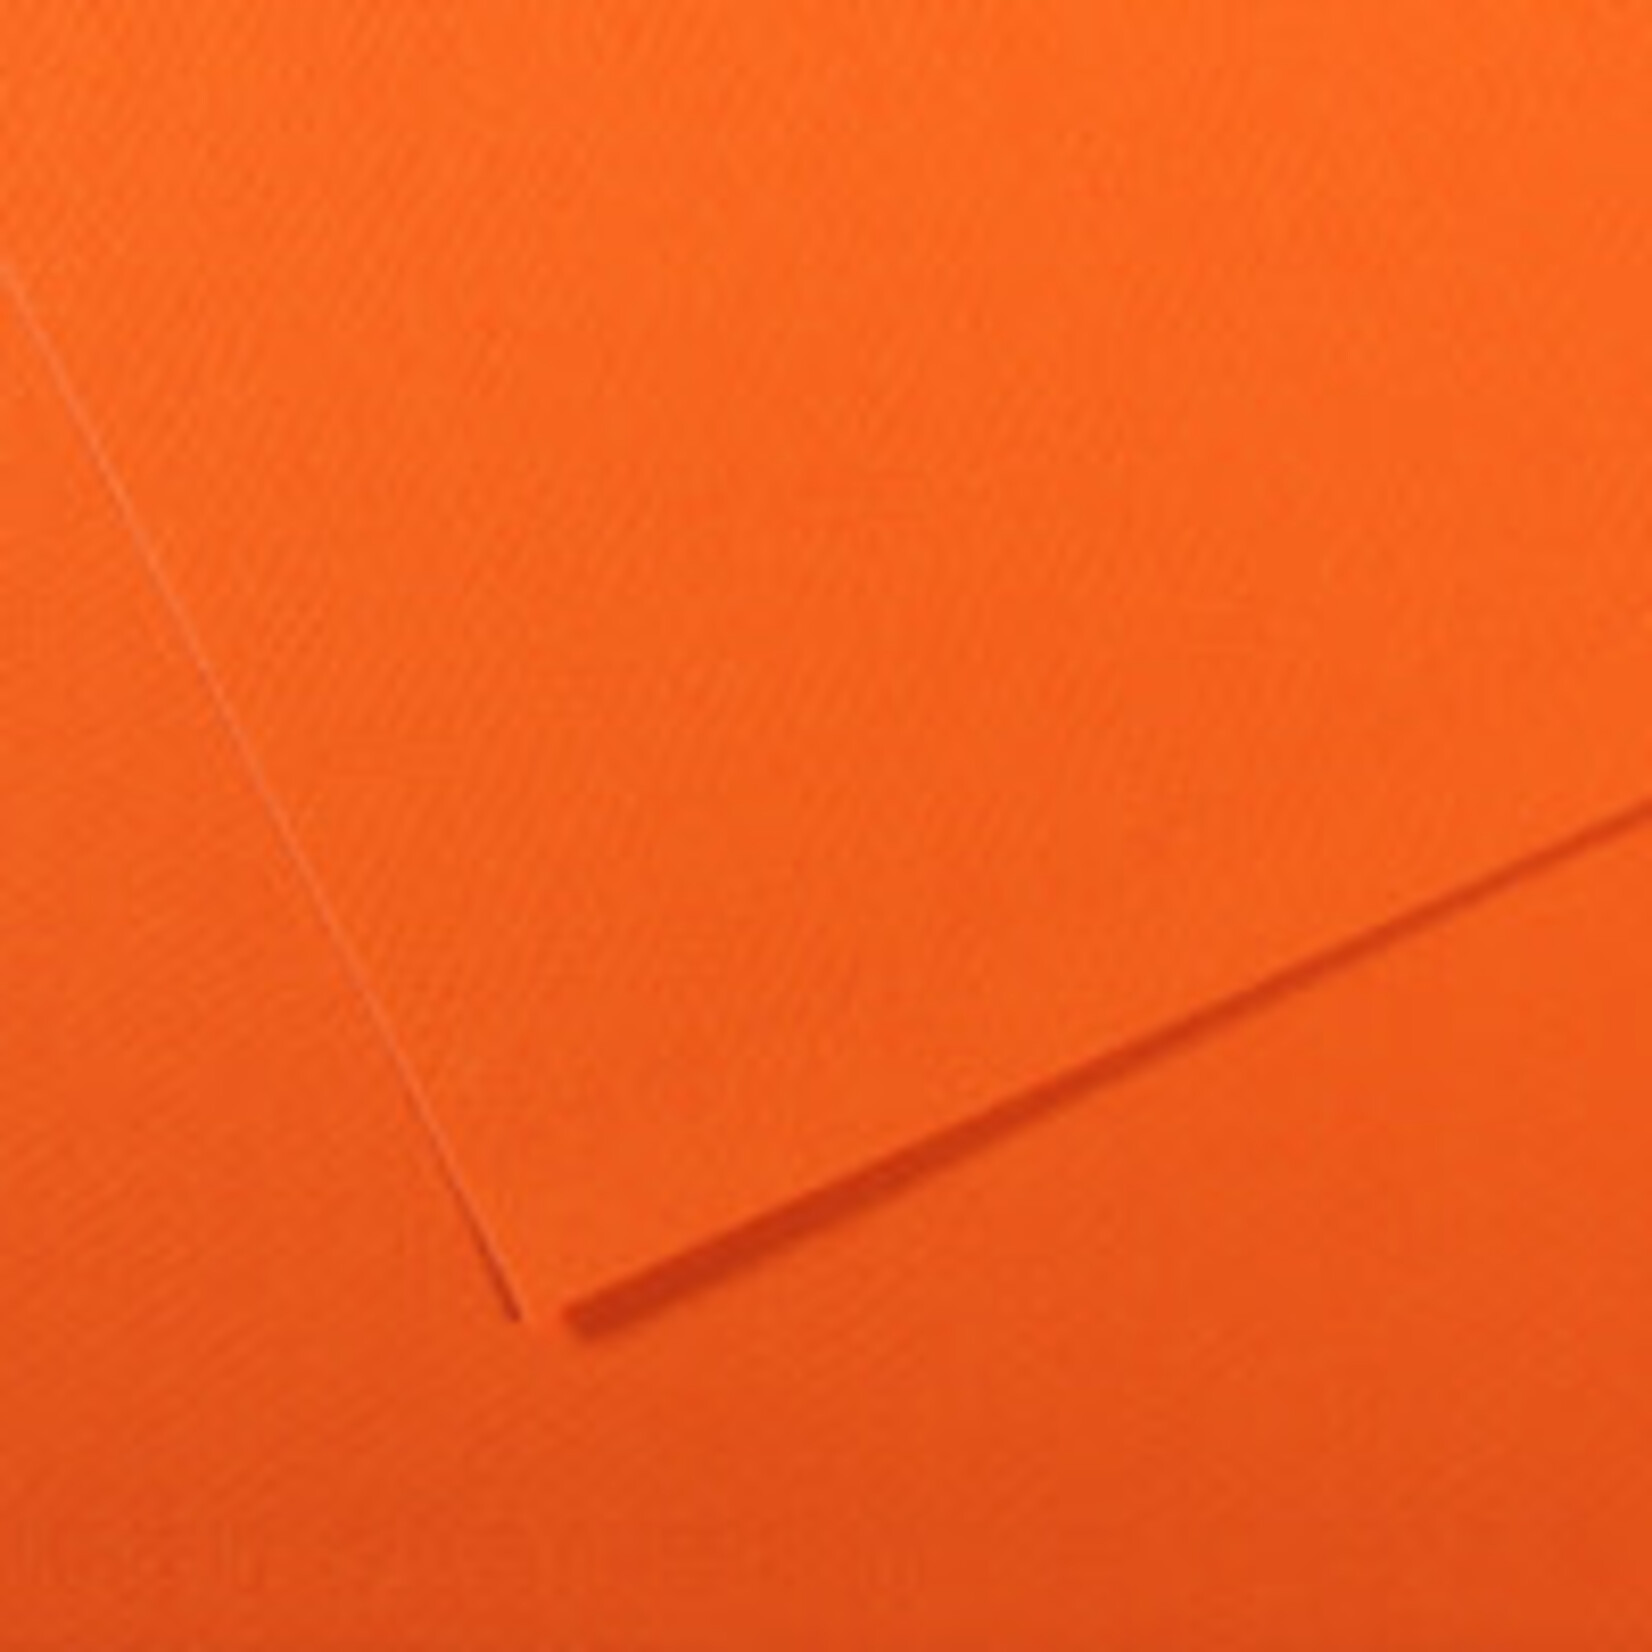 Canson Mi-Teintes Paper Sheets, 19'' x 25'', Orange